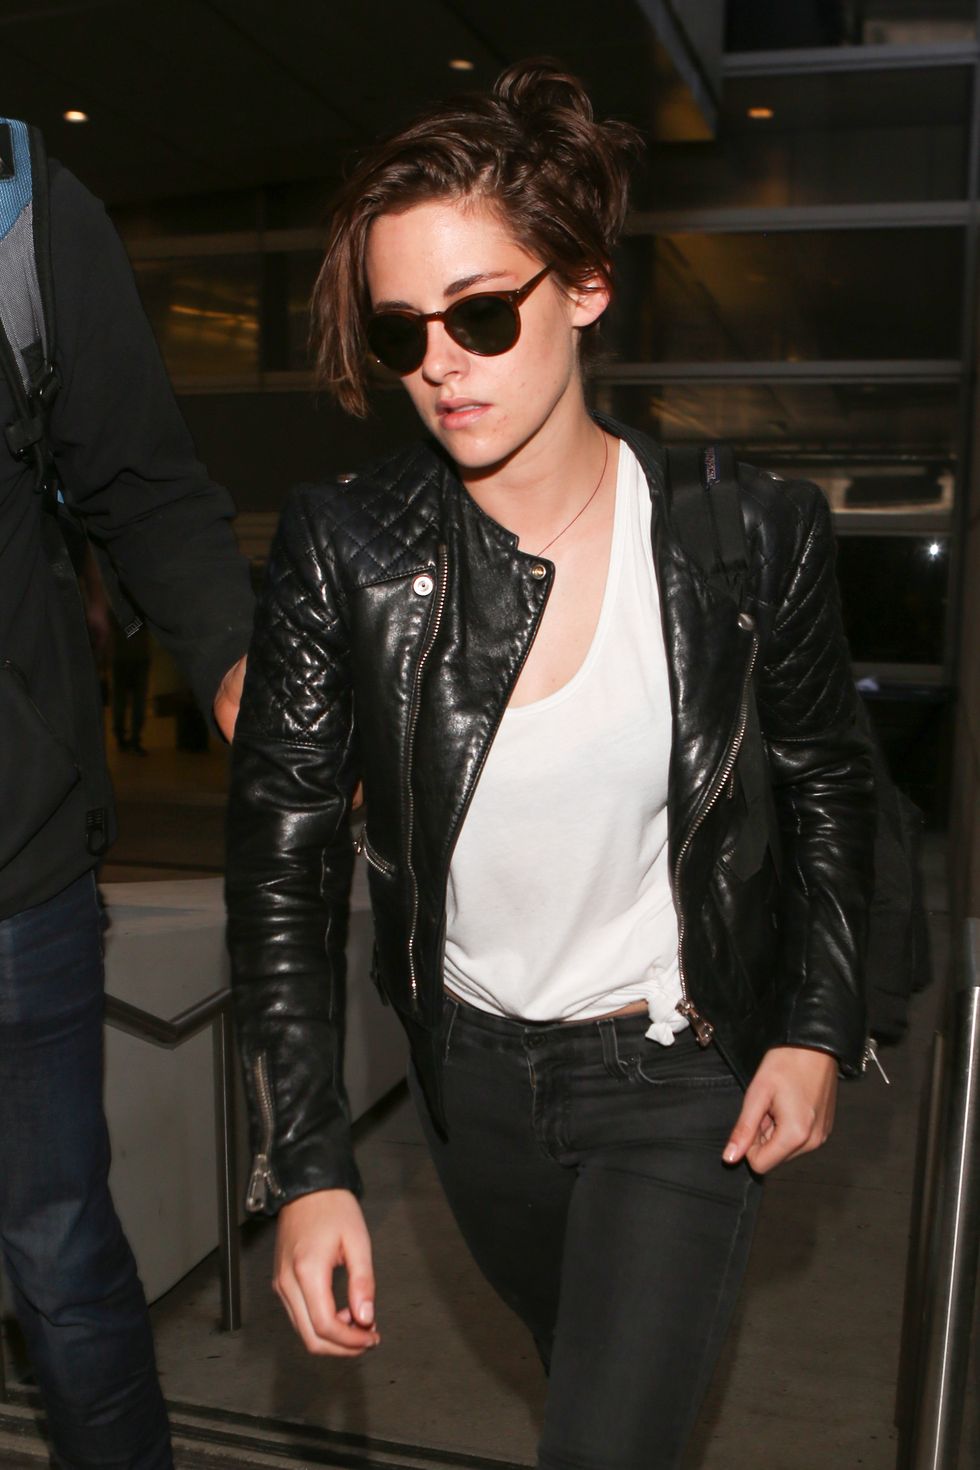 Kristen Stewart wearing a leather jacket at LAX